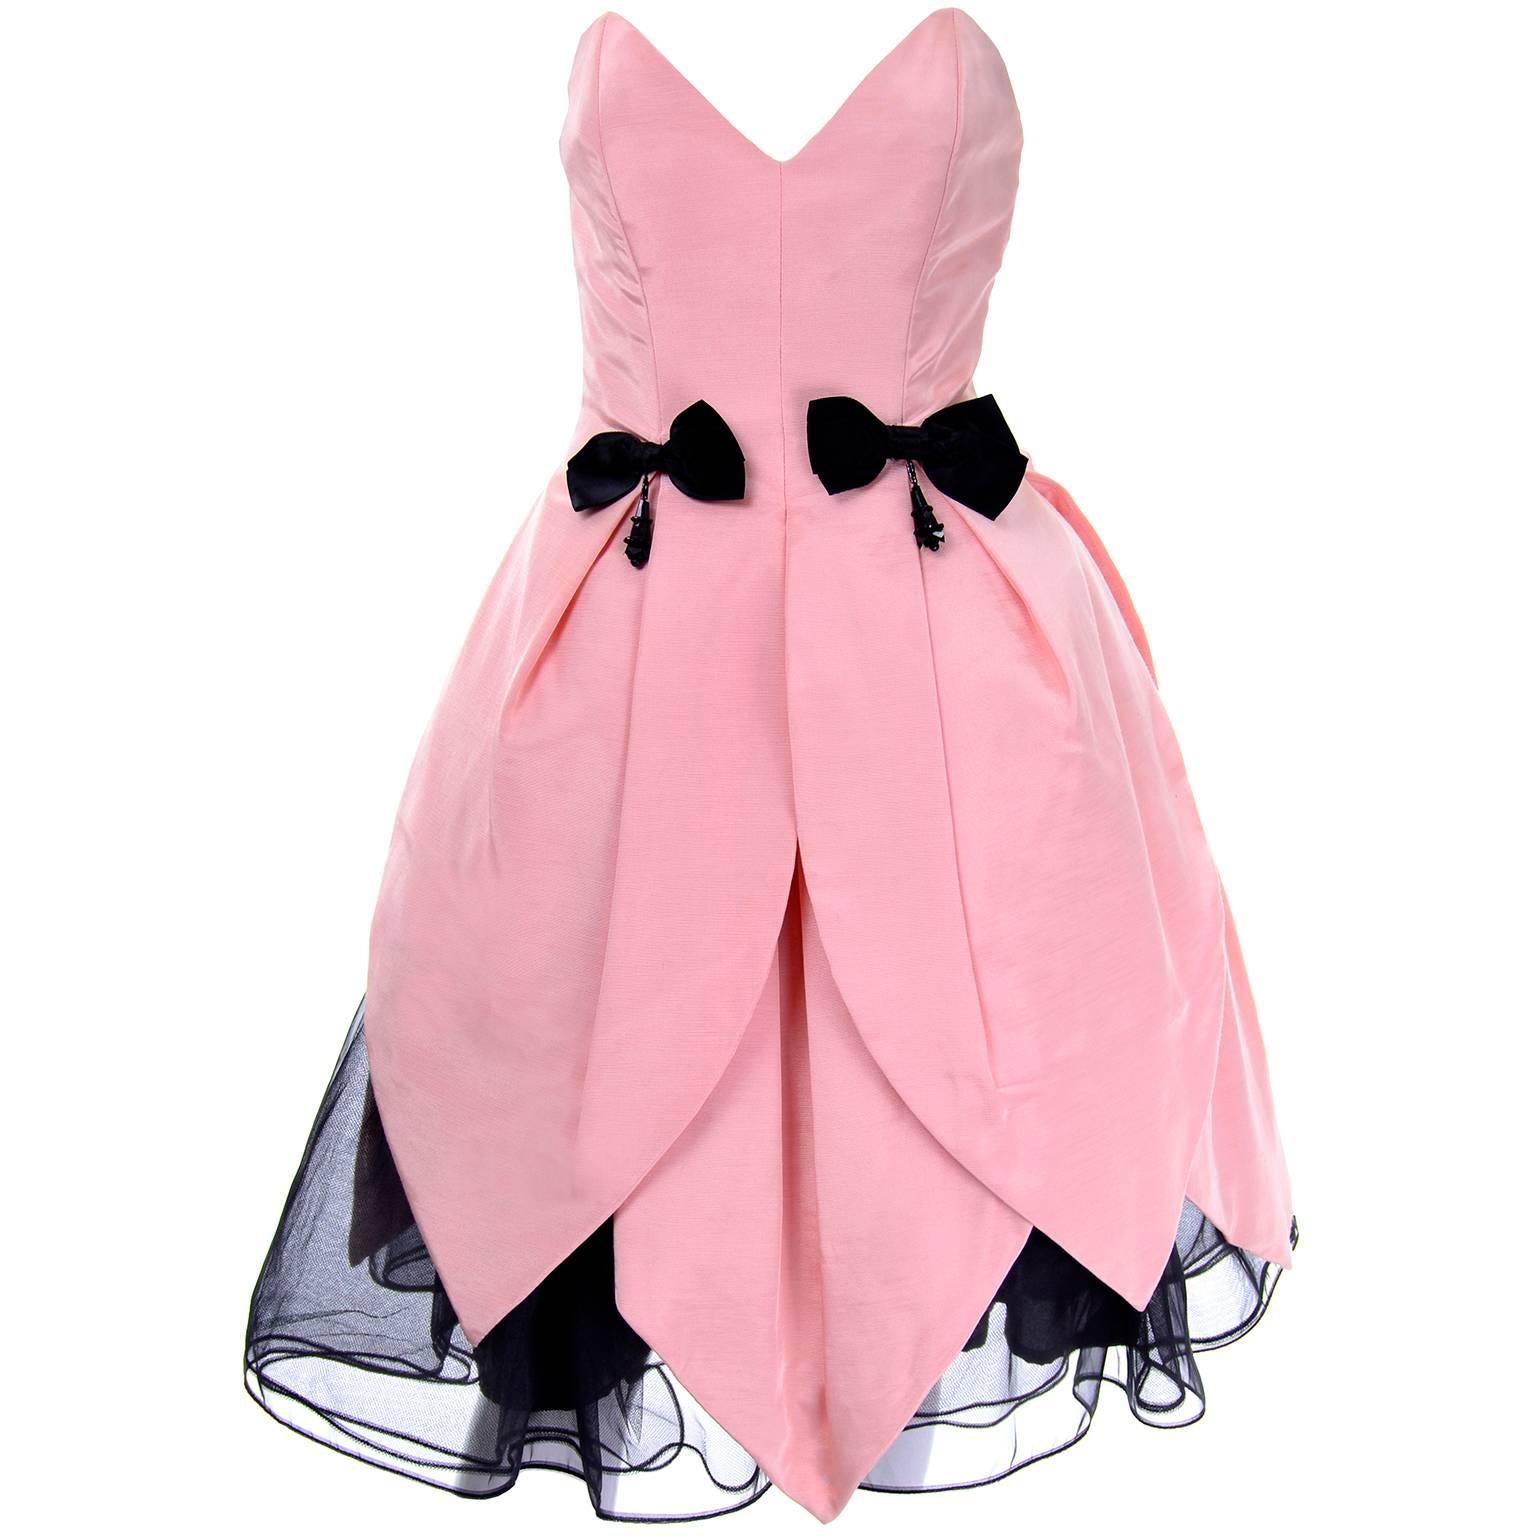 Victor Costa 1980s Bergdorf Goodman Pink & Black Vintage Dress w/ Beading & Bows